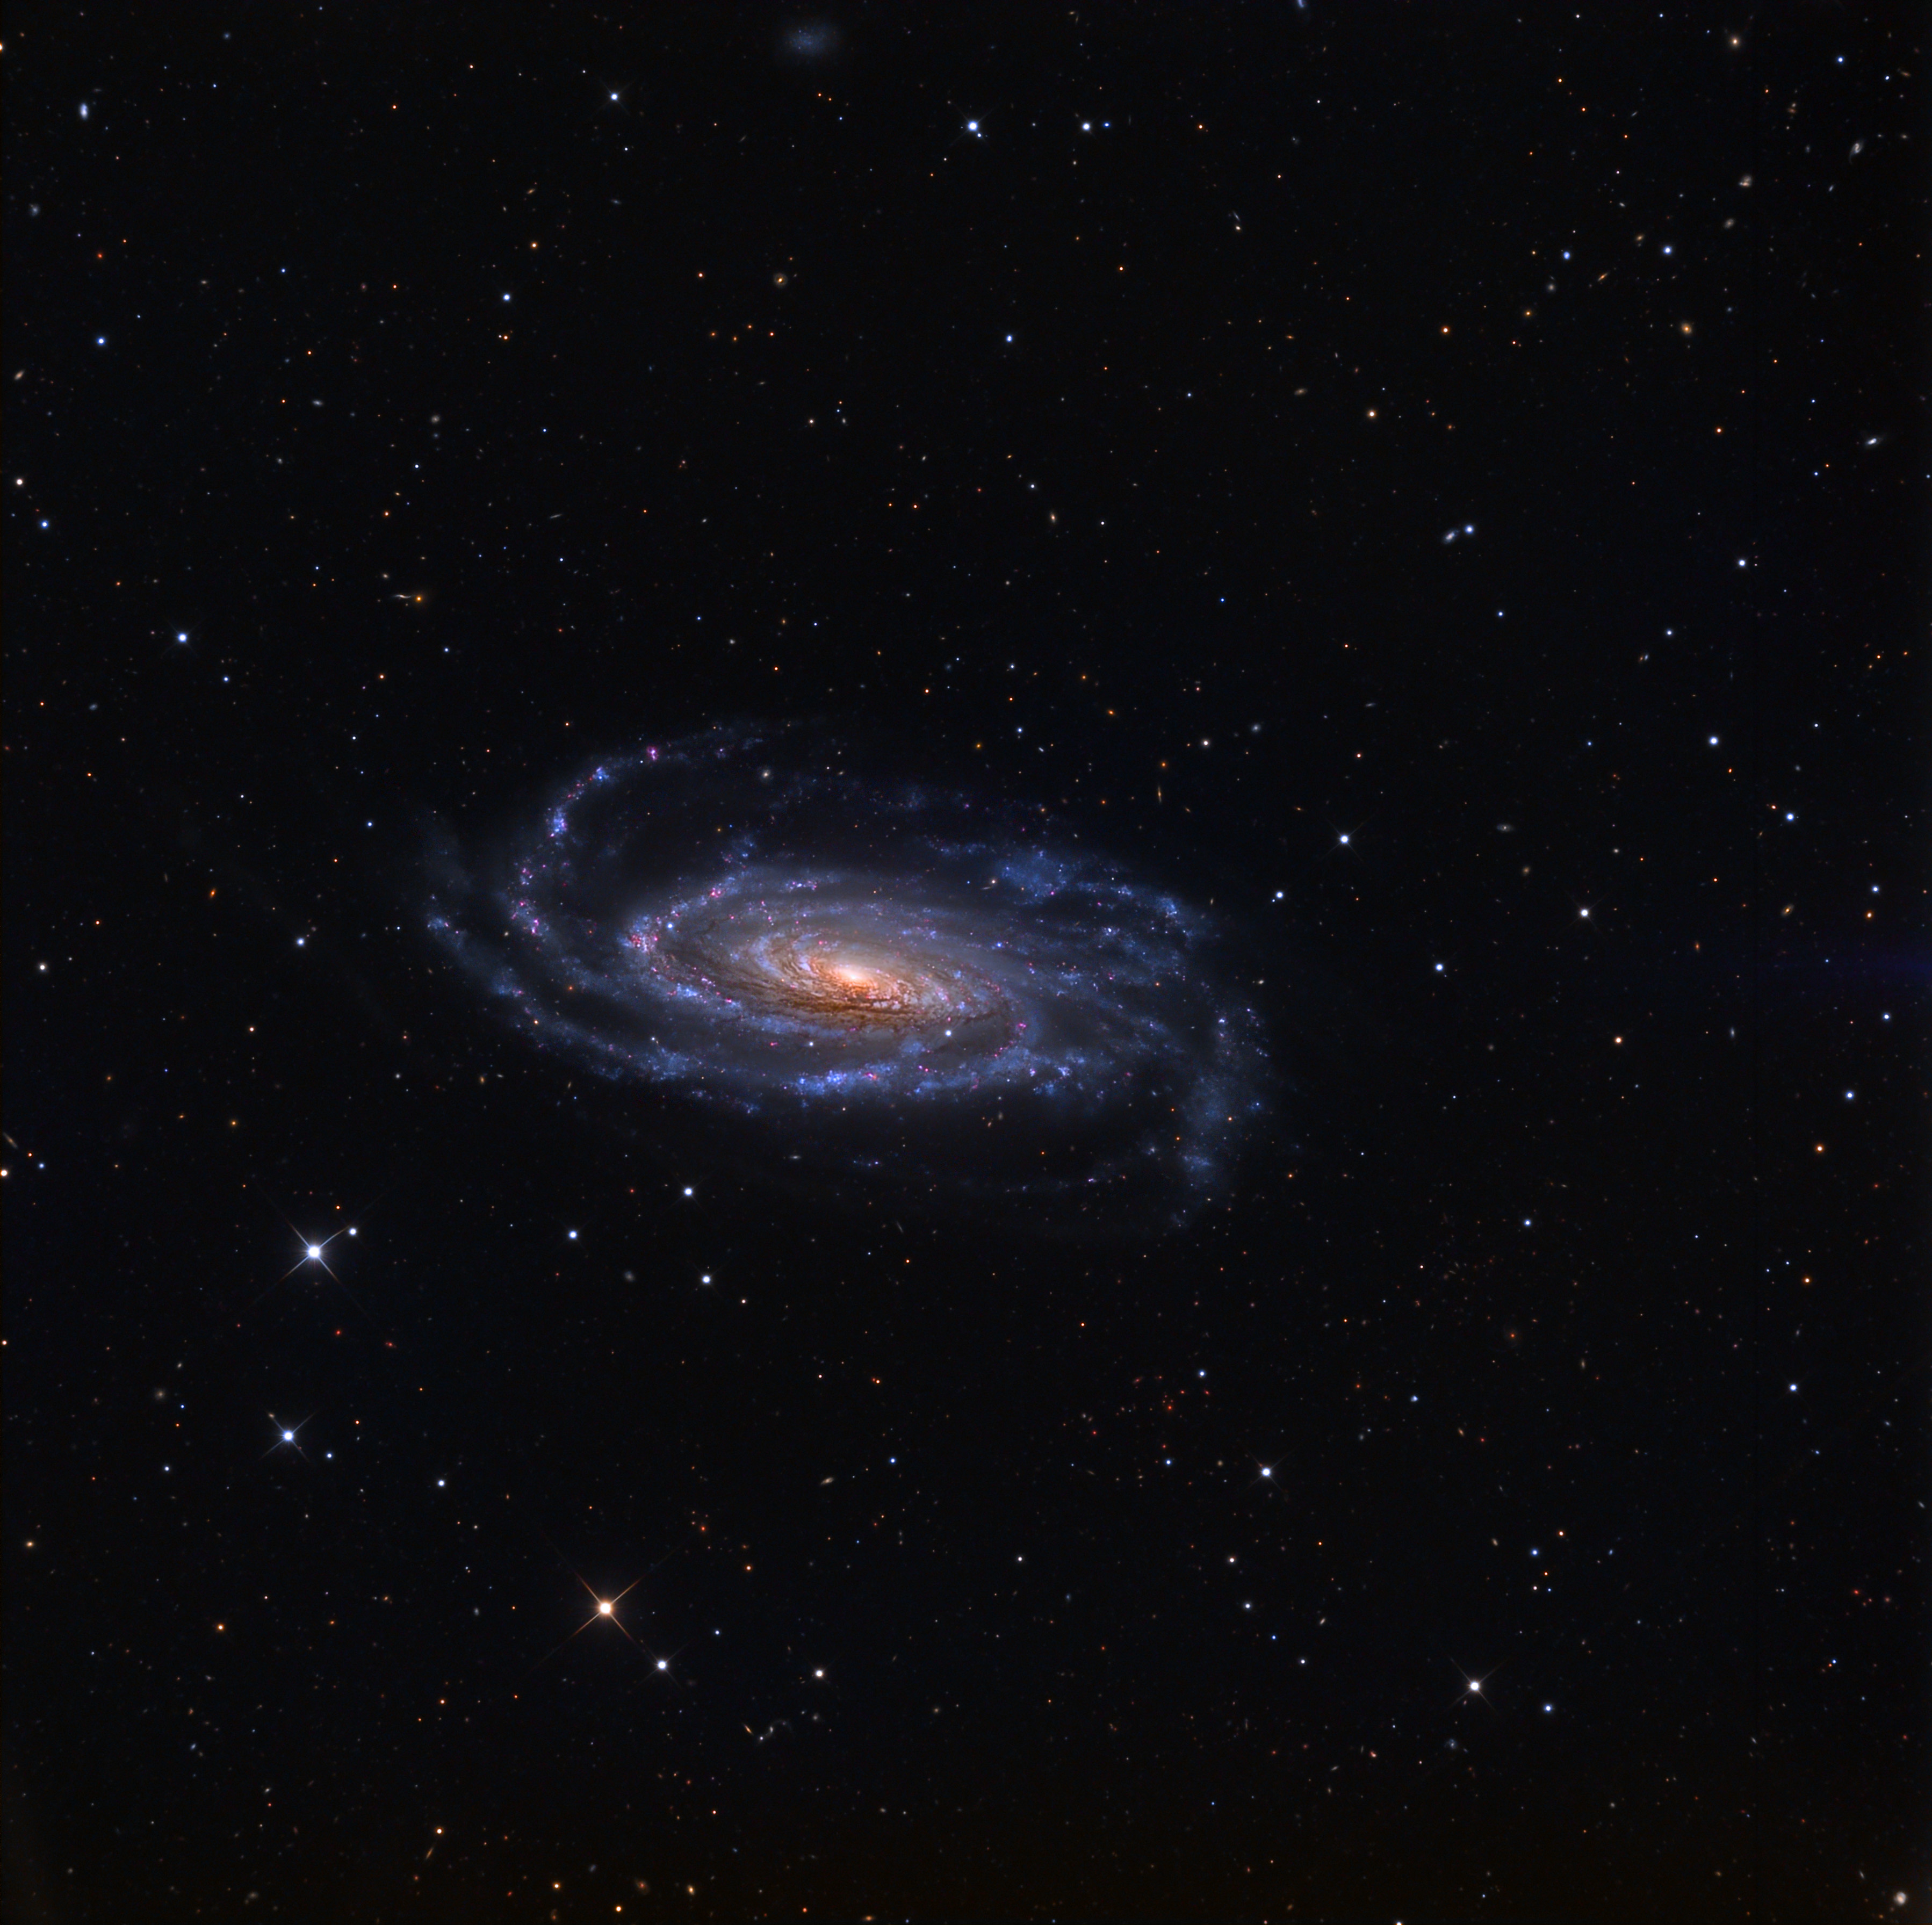 La galaxie spirale NGC 5033